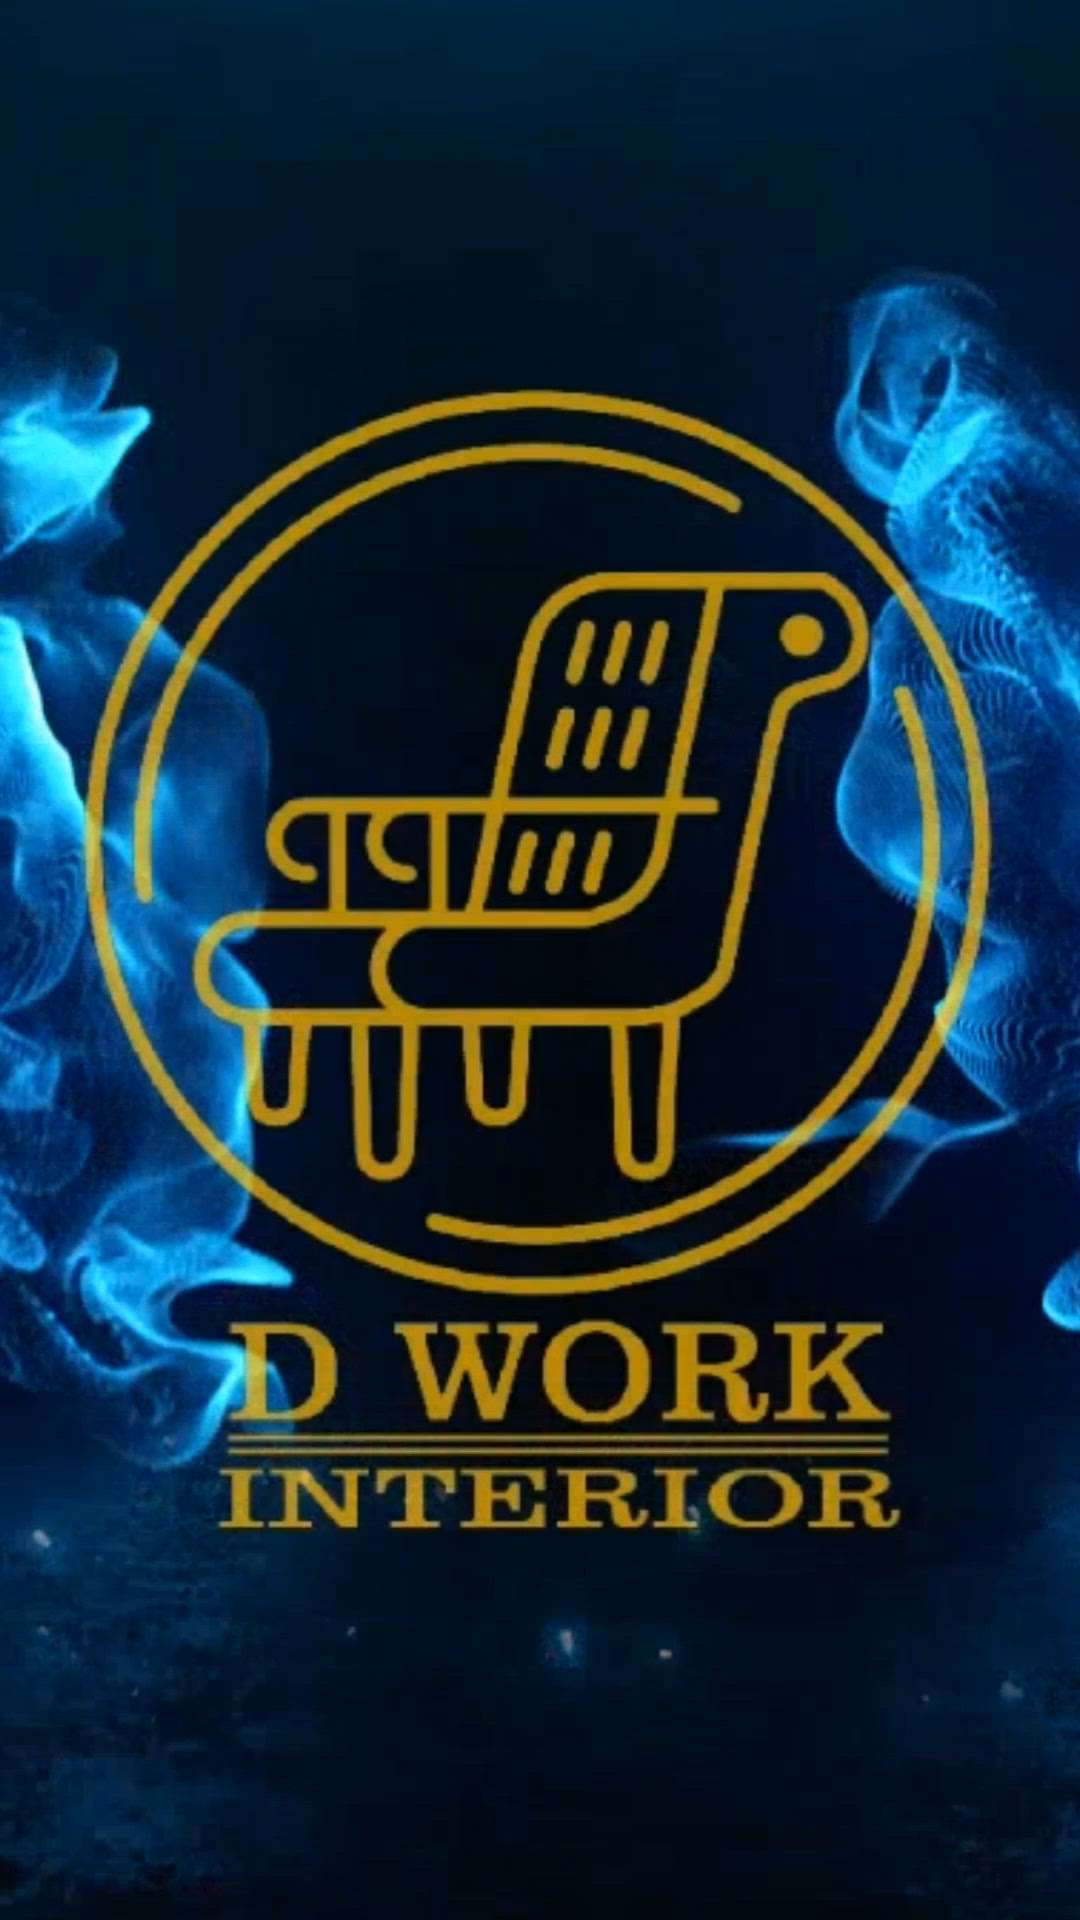 #DWORK,#DWORK MANDIR #
DWORK INTERIOR #